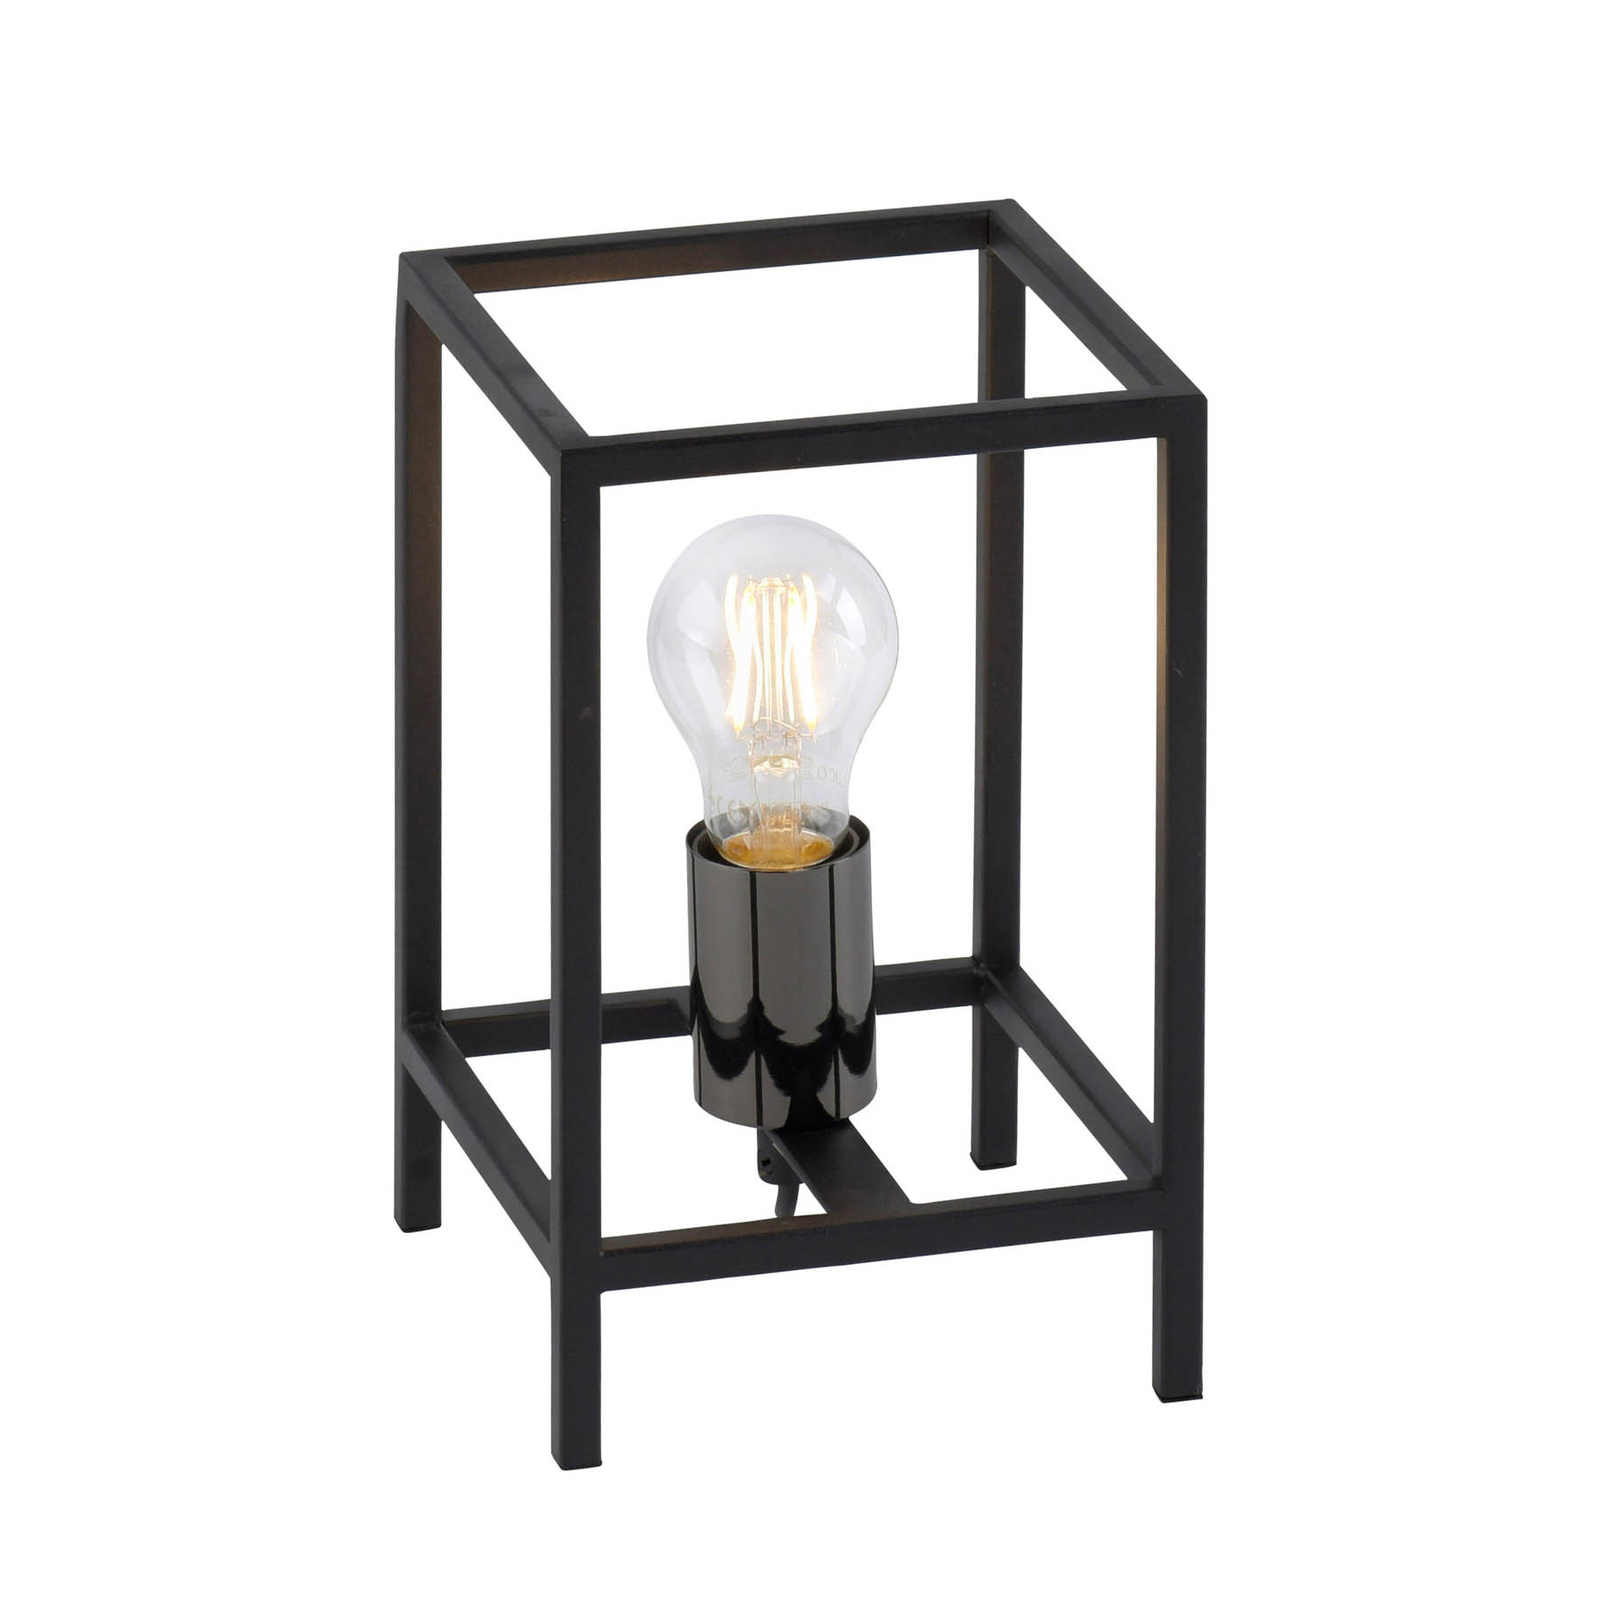 Fabio stolna lampa, pravokutna, crna